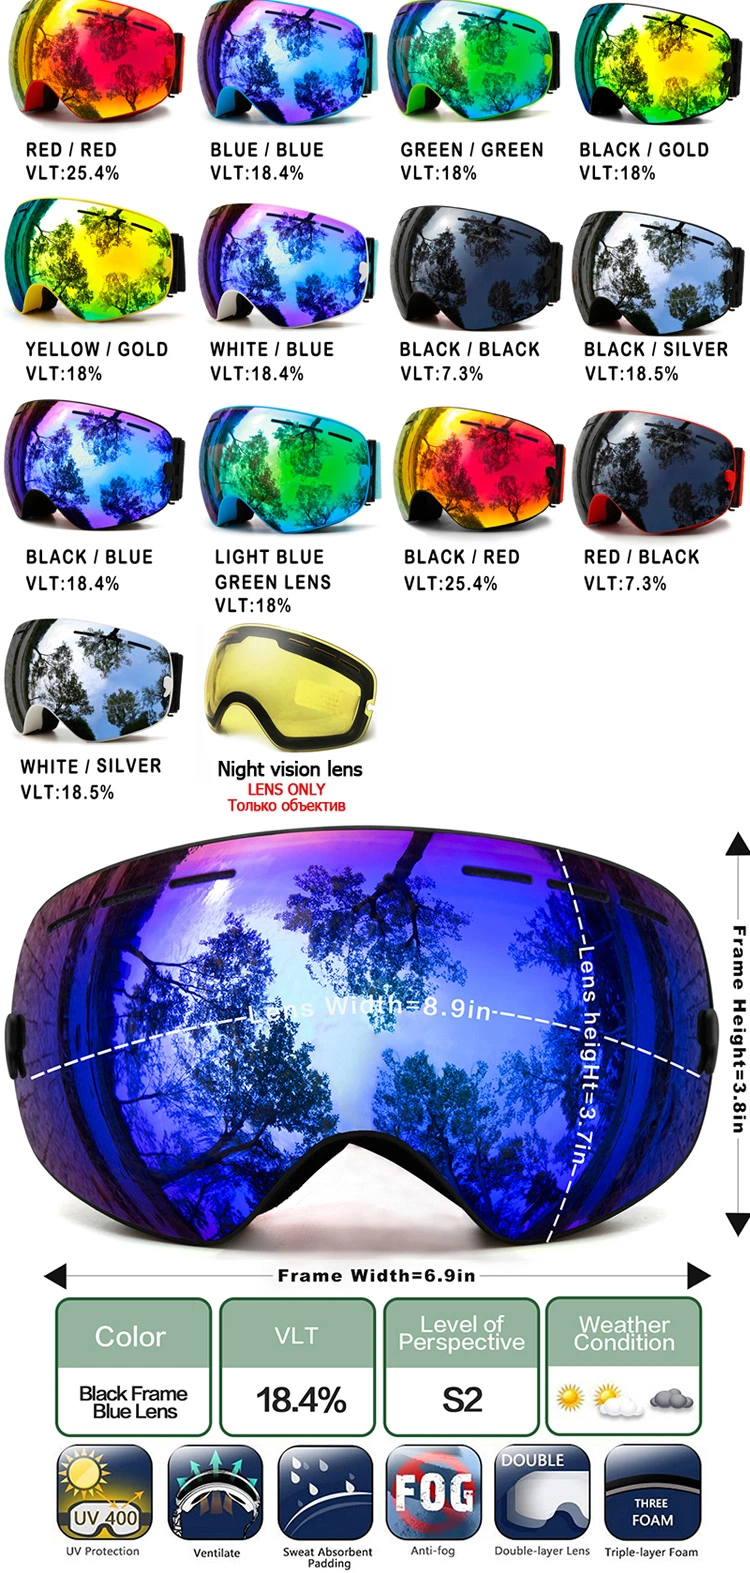 Cheap Prescription Rainbow Coating Sporting Sunglasses Ski Goggles